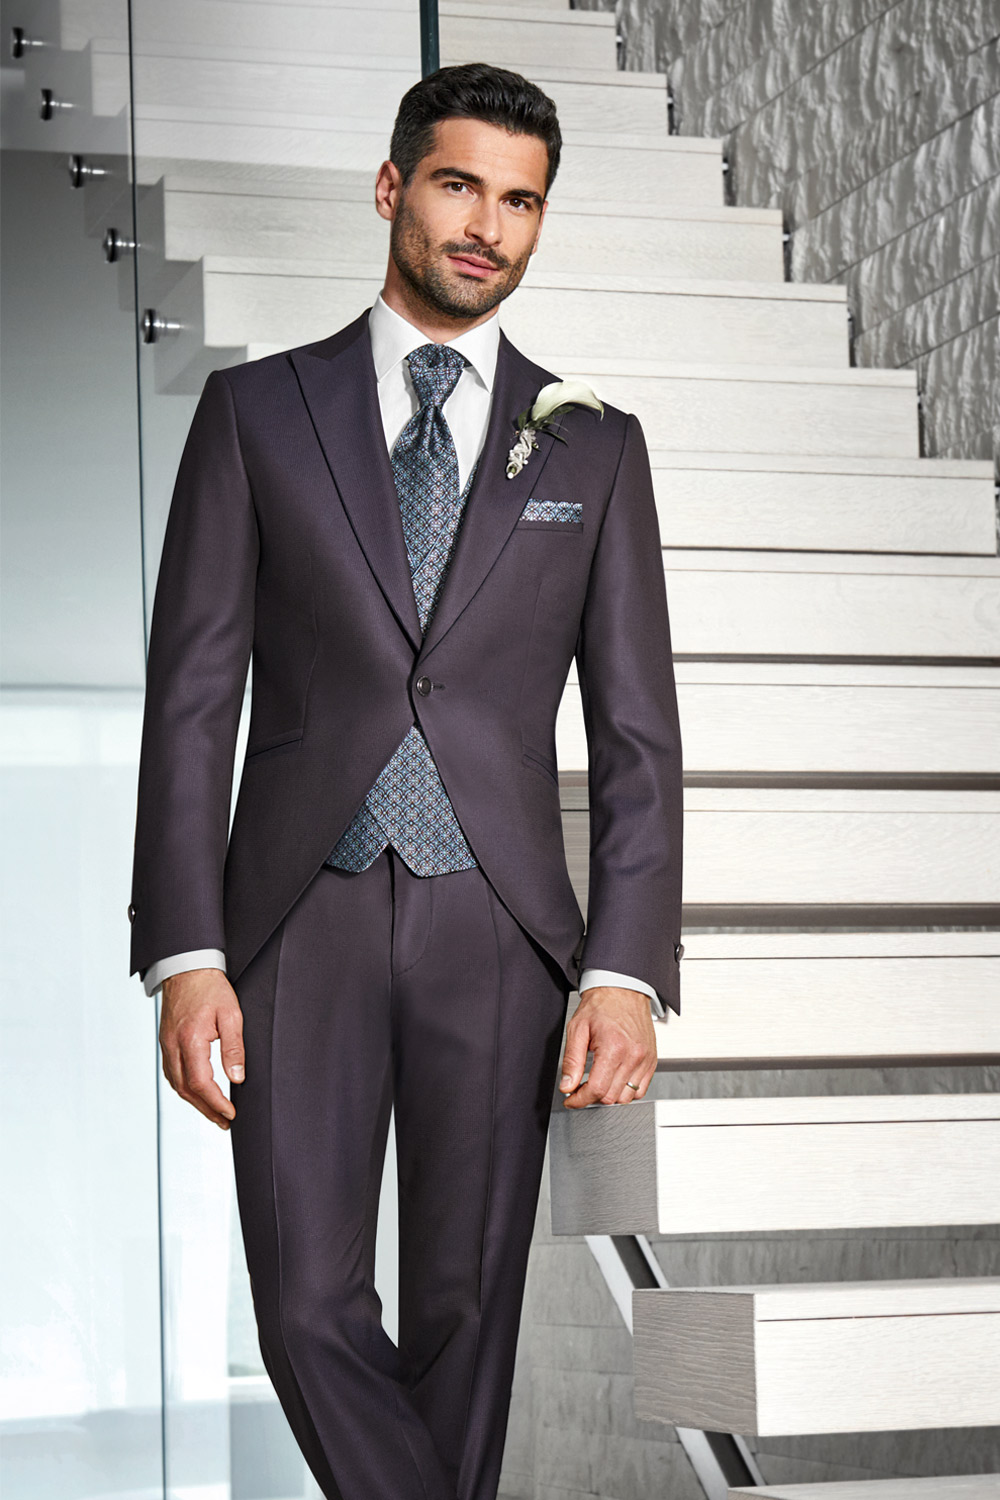 Merlot 3 piece Wedding Suit - Tom Murphy's Formal and Menswear